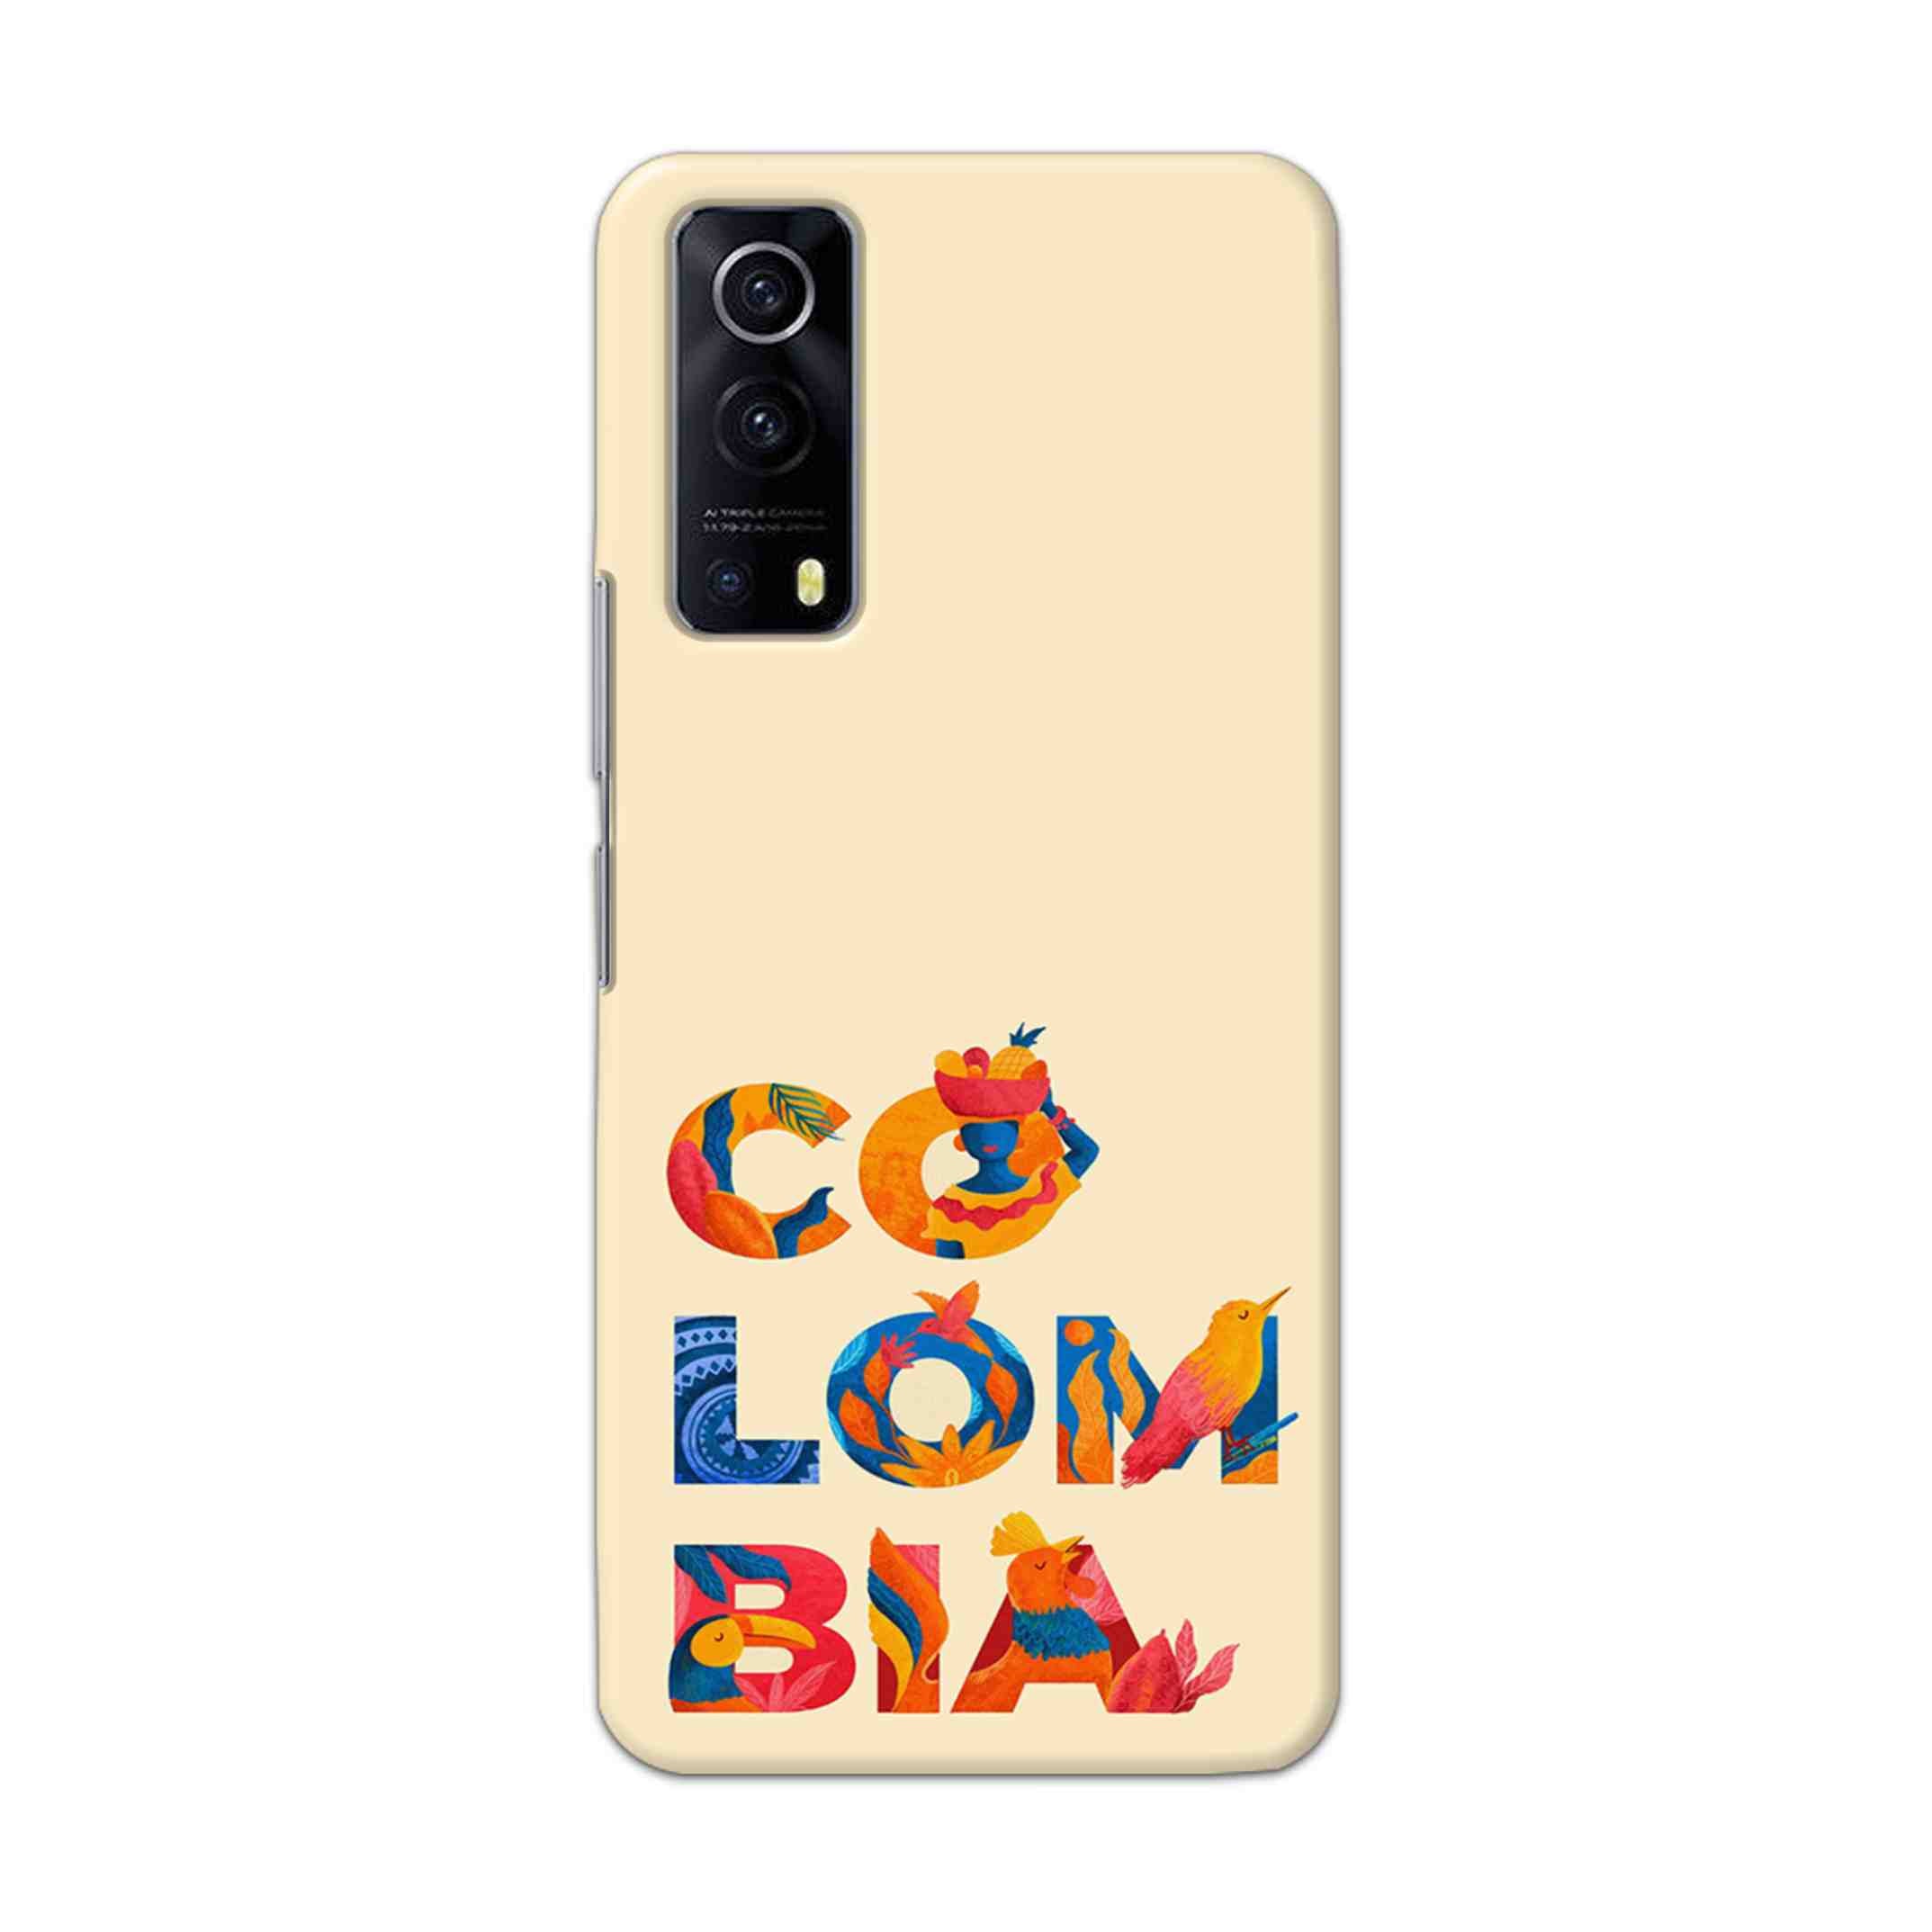 Buy Colombia Hard Back Mobile Phone Case Cover For Vivo IQOO Z3 Online